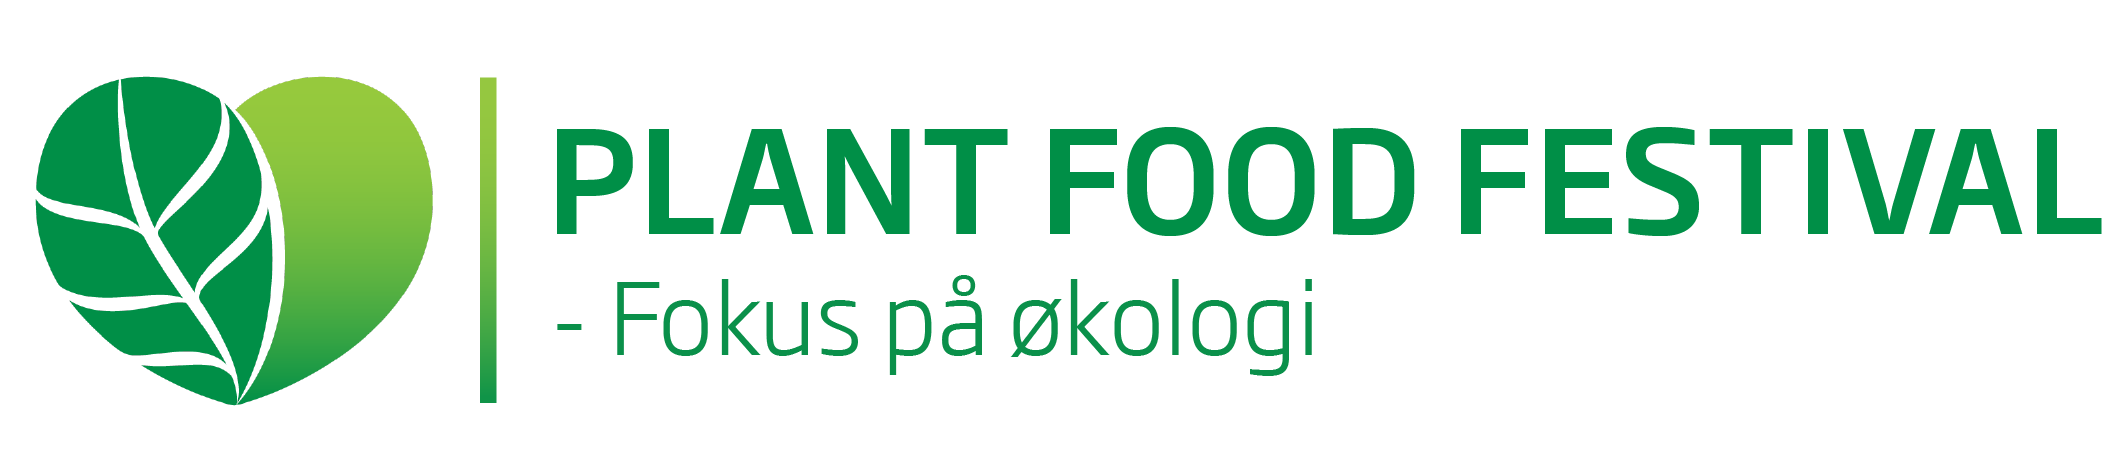 plantfoodfestival.dk